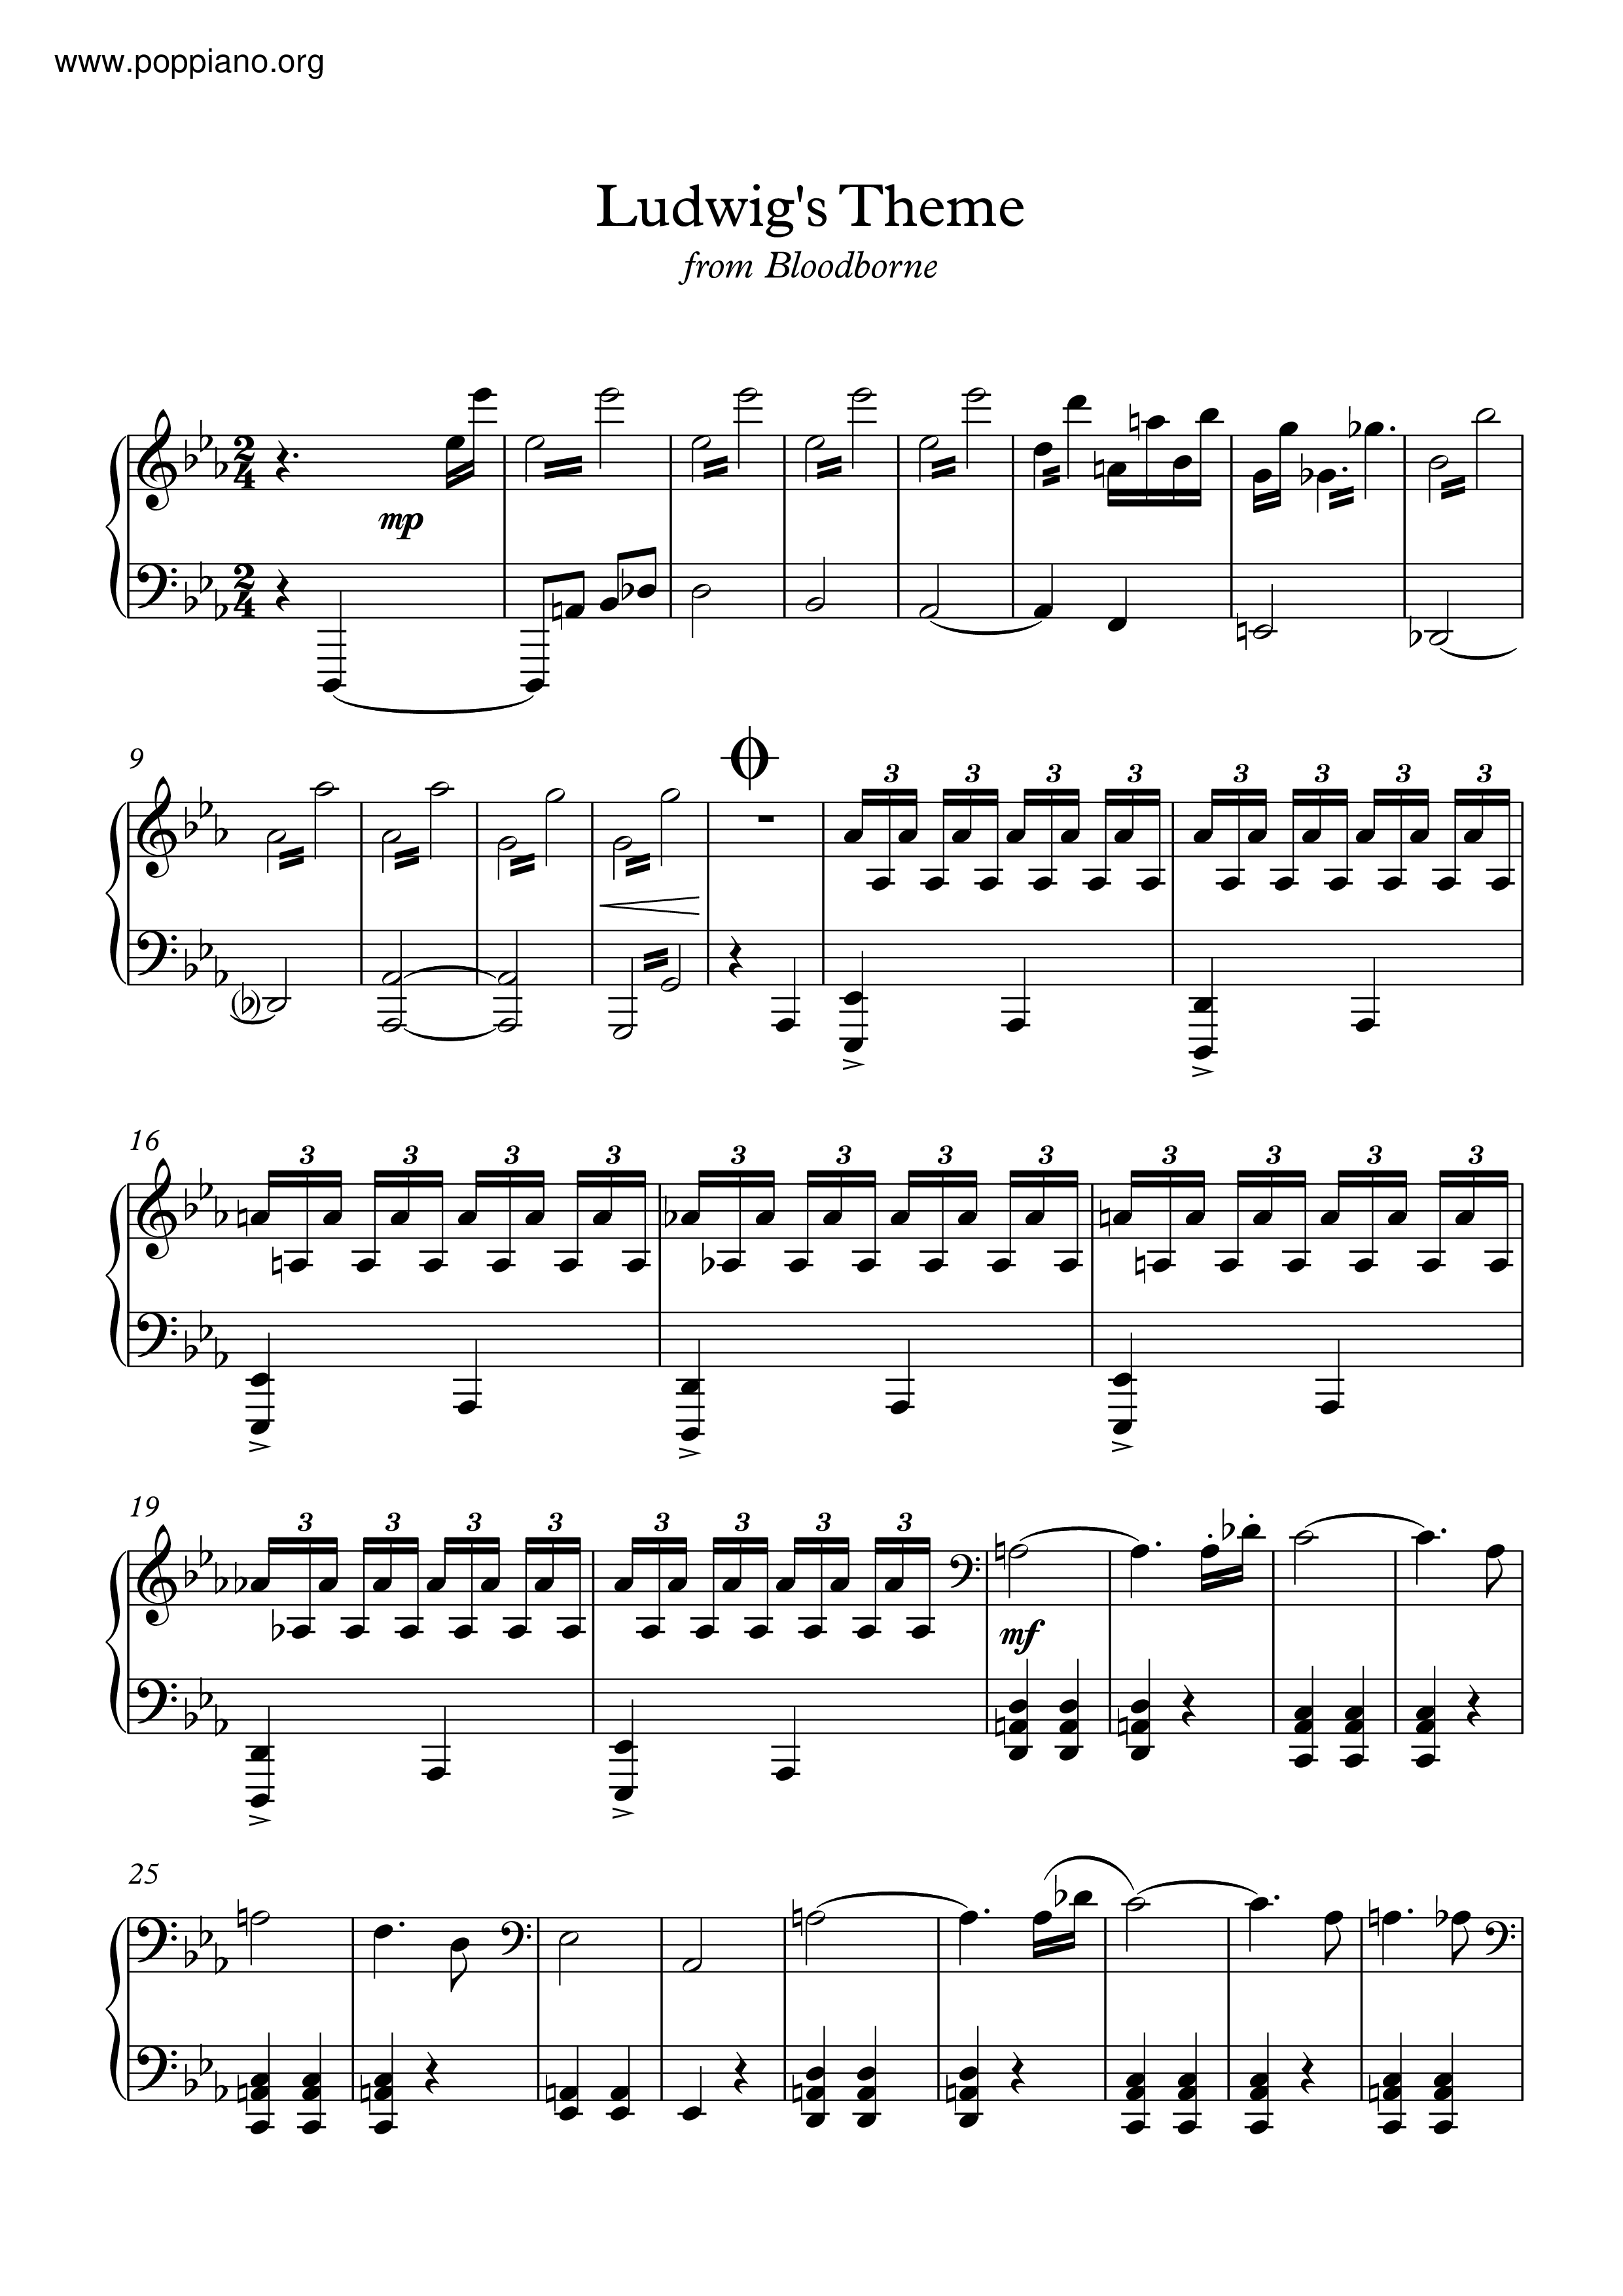 Ludwig's Theme Score